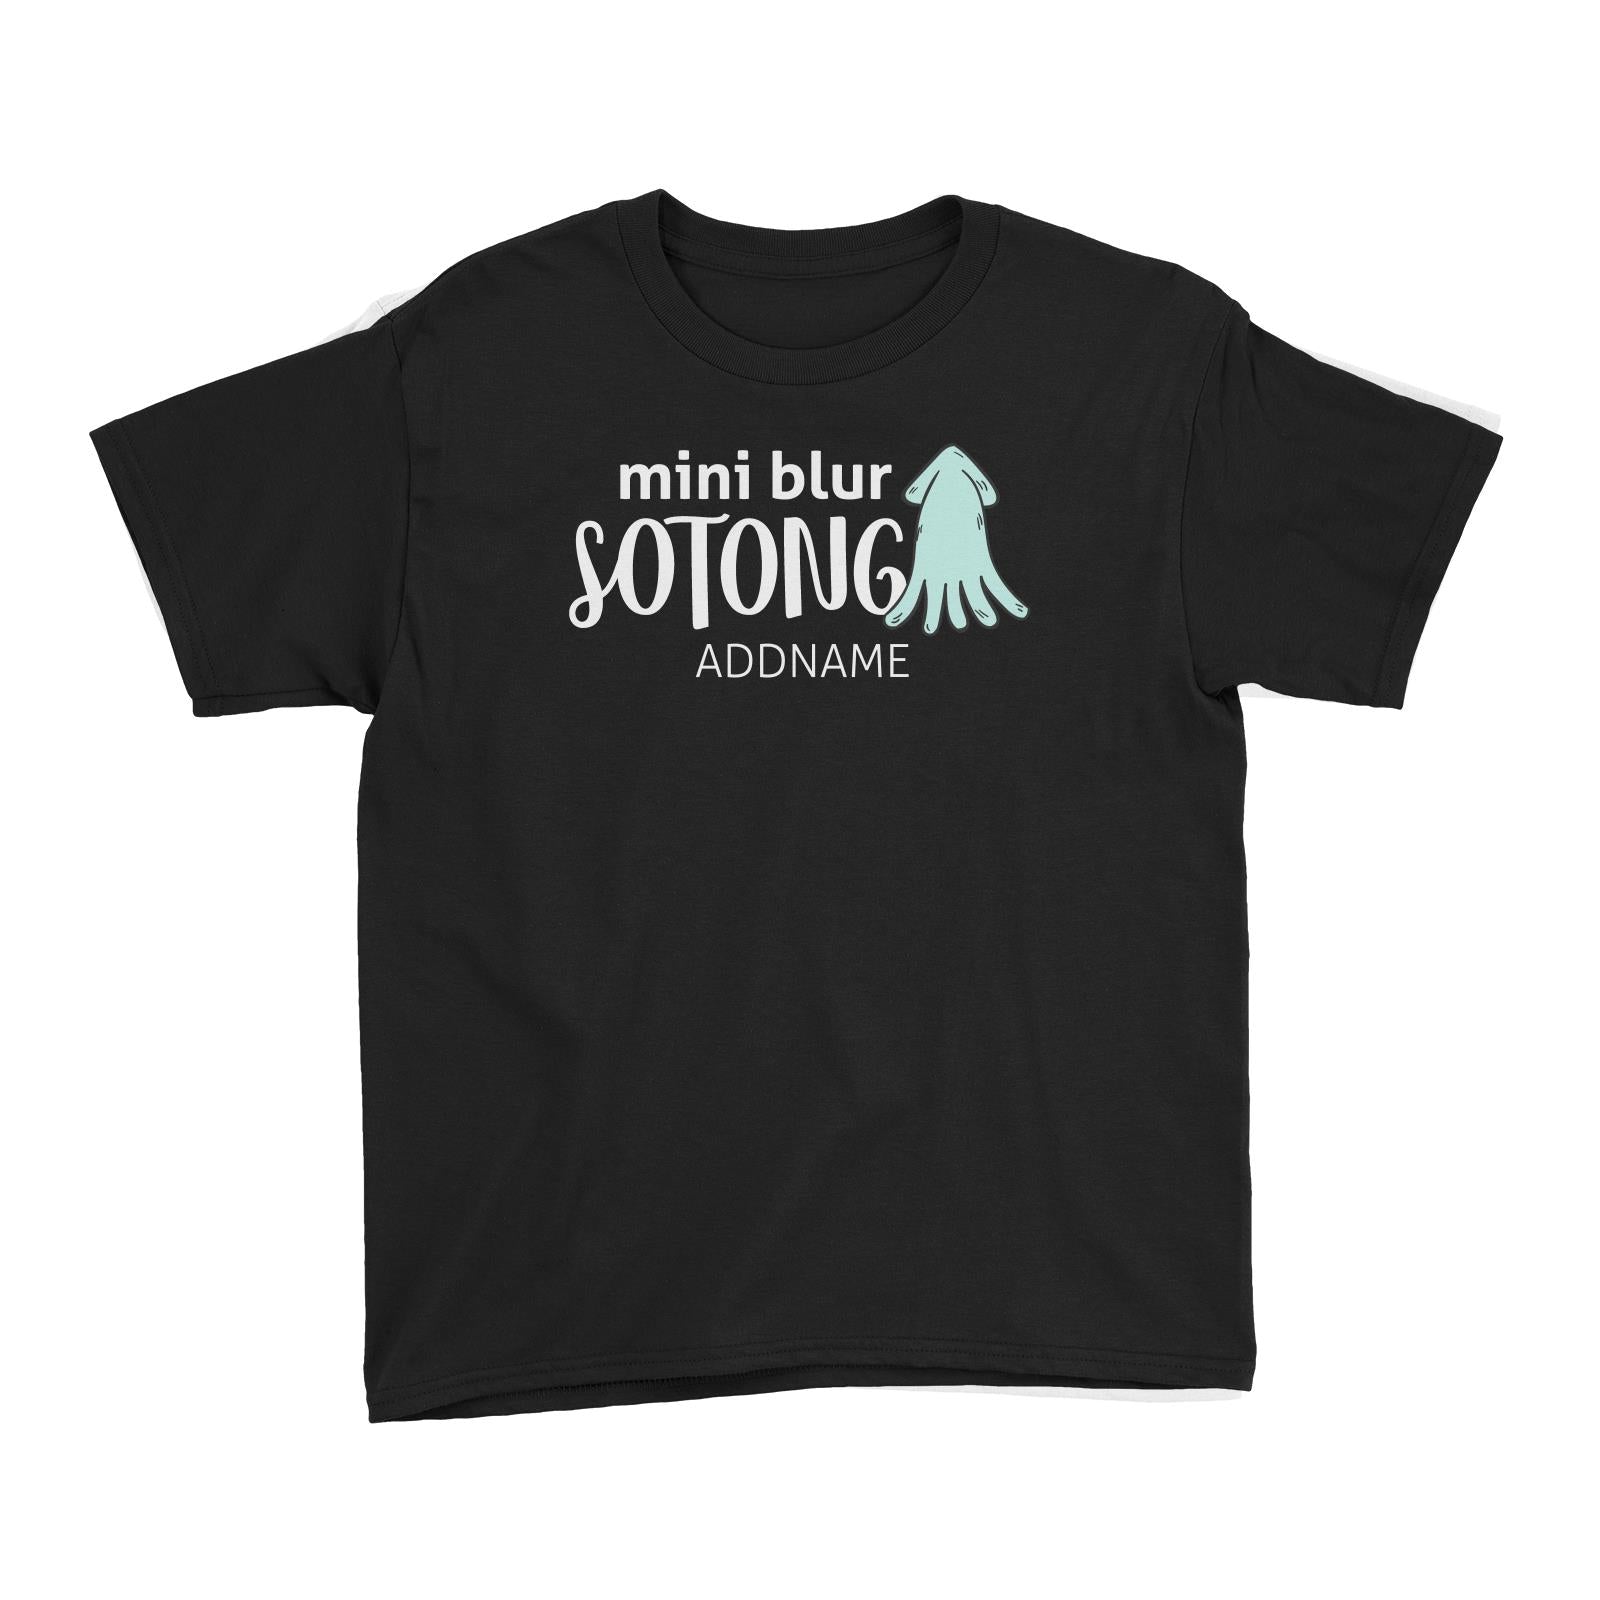 Mini Blur Sotong Kid's T-Shirt